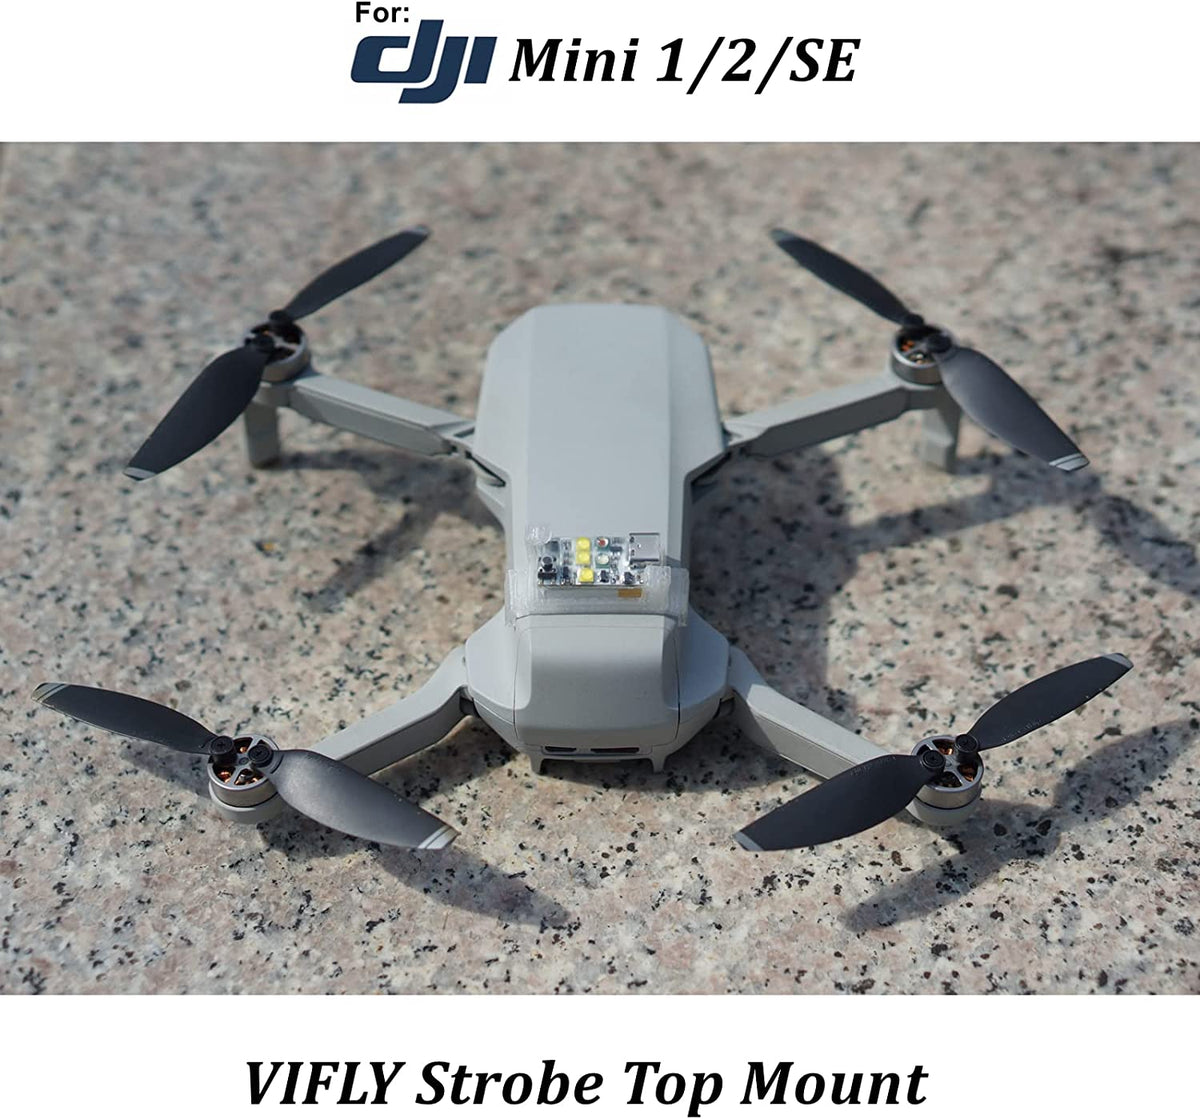 VIFLY Strobe Anti-Collision Drone LED Light